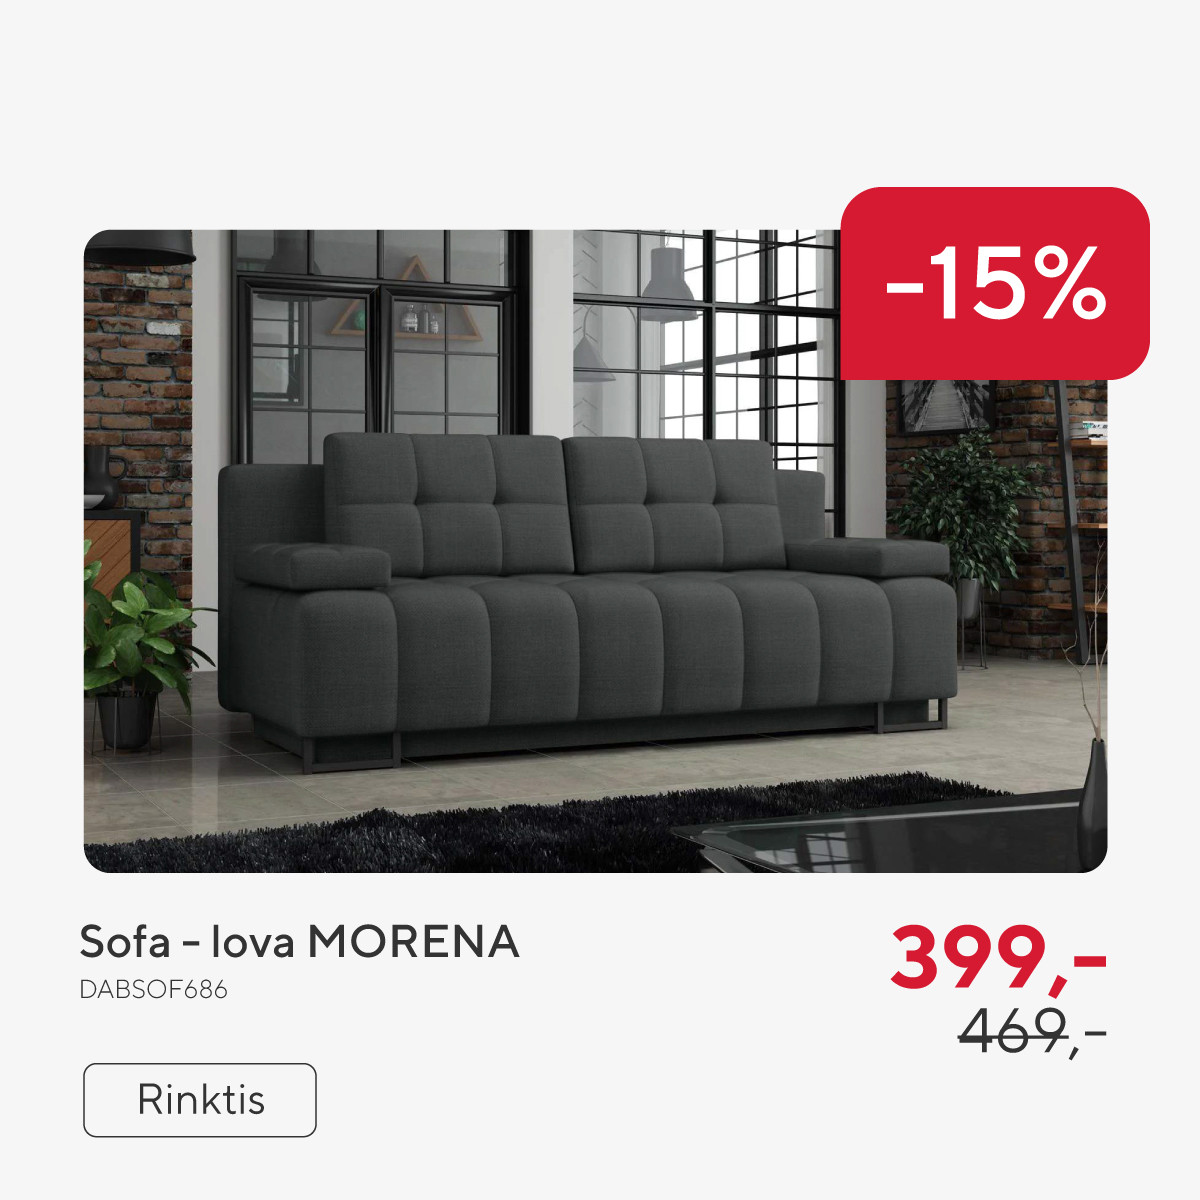 Sofa - lova MORENA